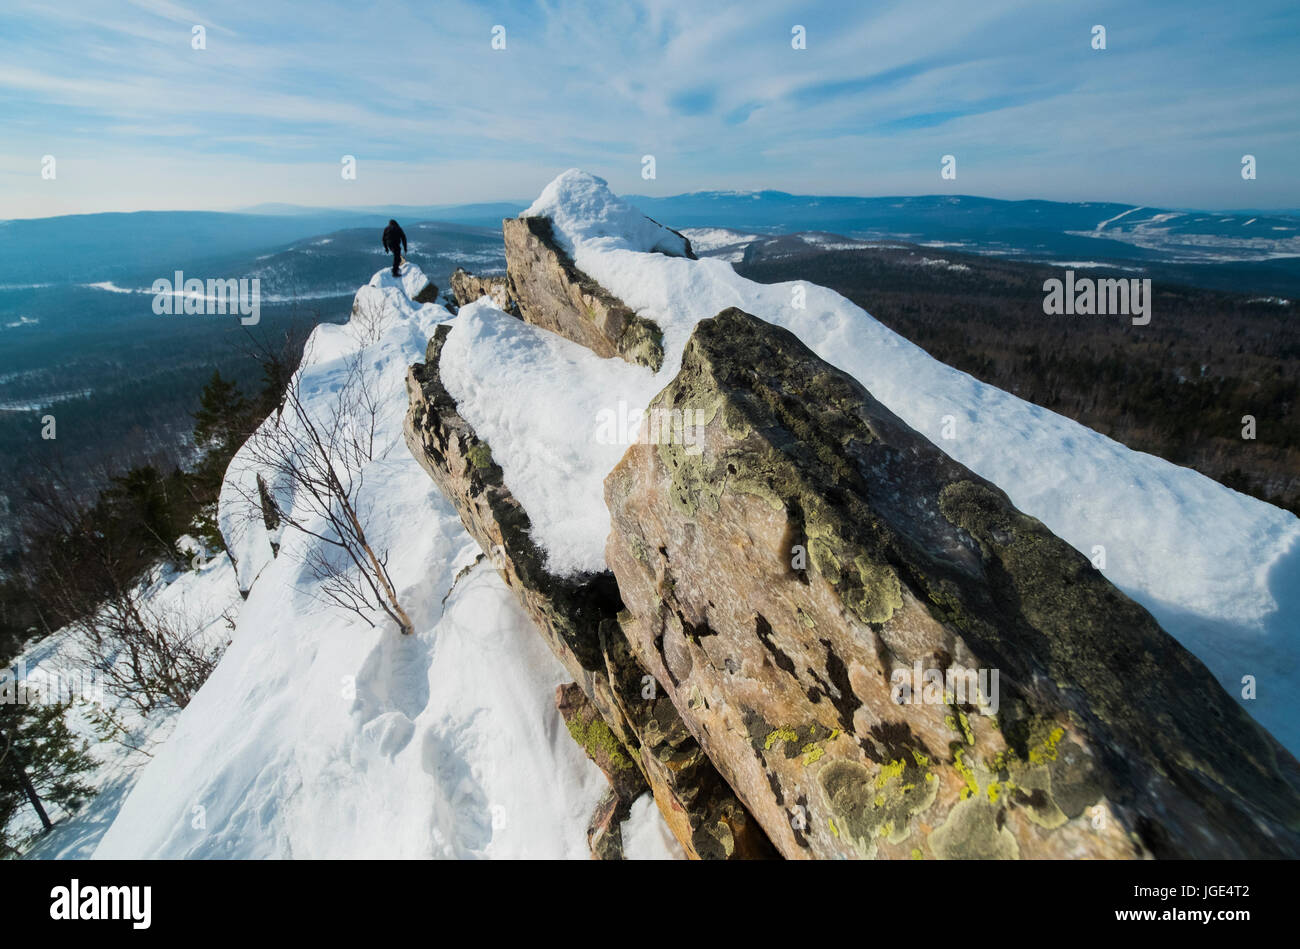 Caucasian man hiking on mountain in winter Stock Photo